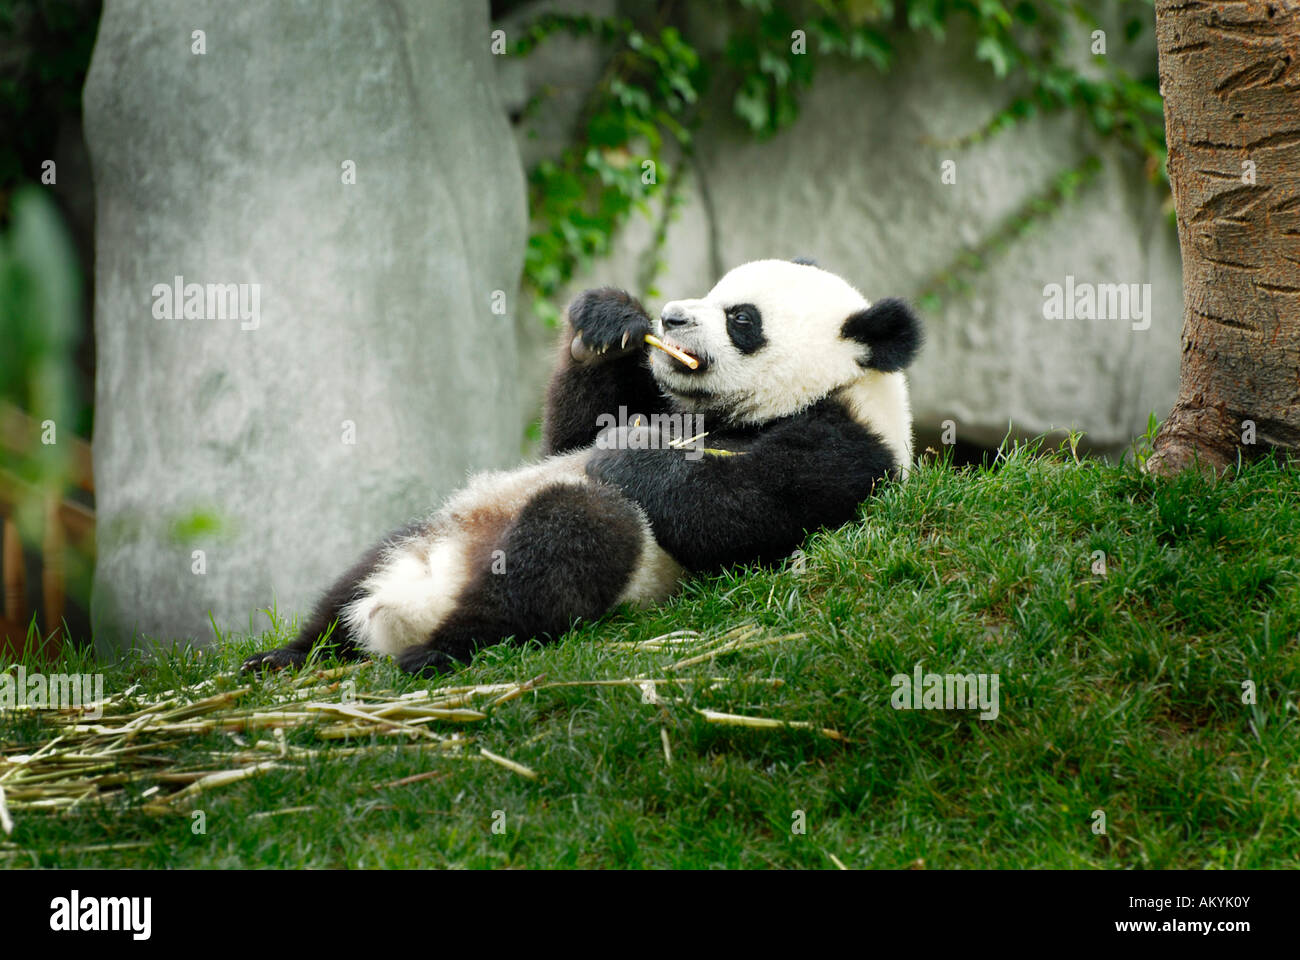 Panda gigante (Ailuropoda melanoleuca) alimentazione, Panda stazione di allevamento nei pressi di Chengdu, Cina e Asia Foto Stock